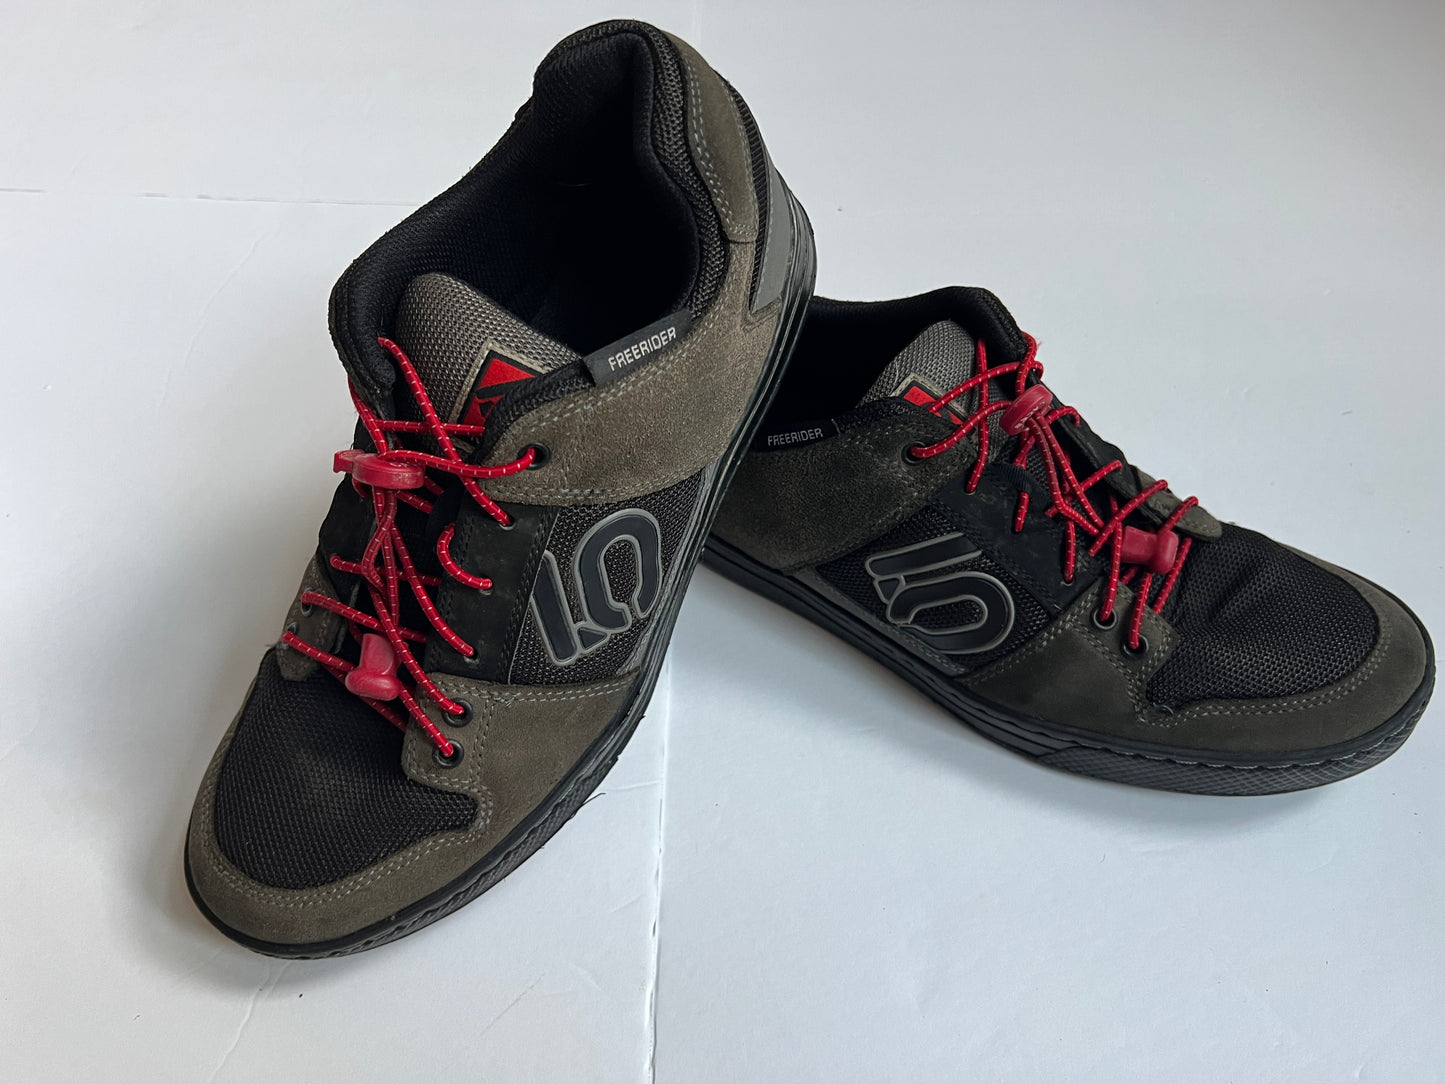 Mens Shoe Size 10.5 Five Ten Freerider Mountain Biking Shoes by Adidas